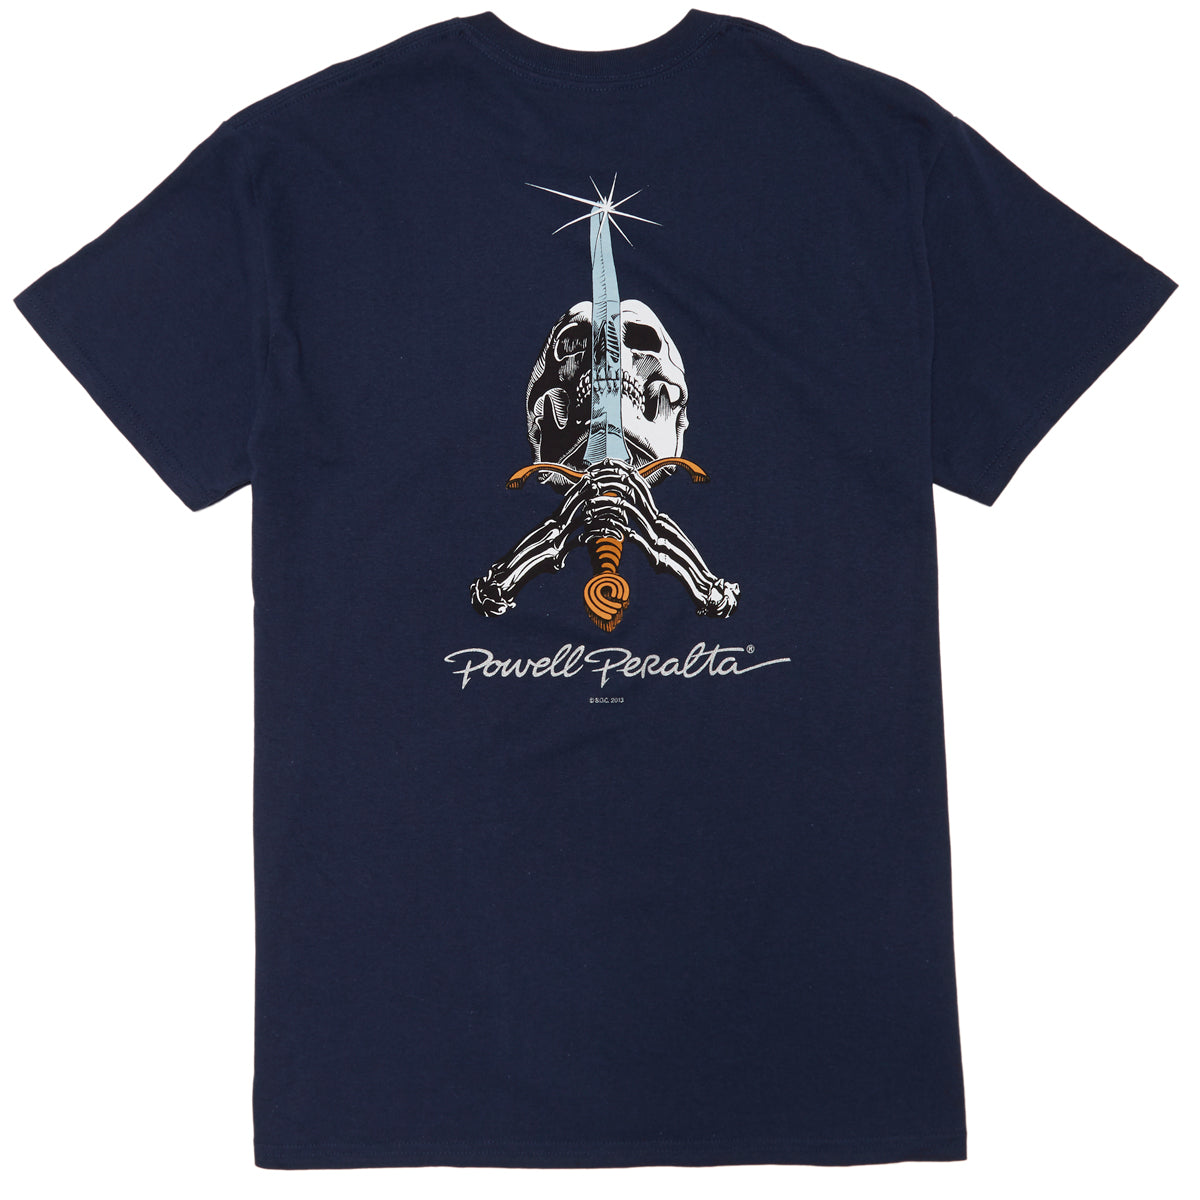 Powell-Peralta Skull And Sword T-Shirt - Navy image 1